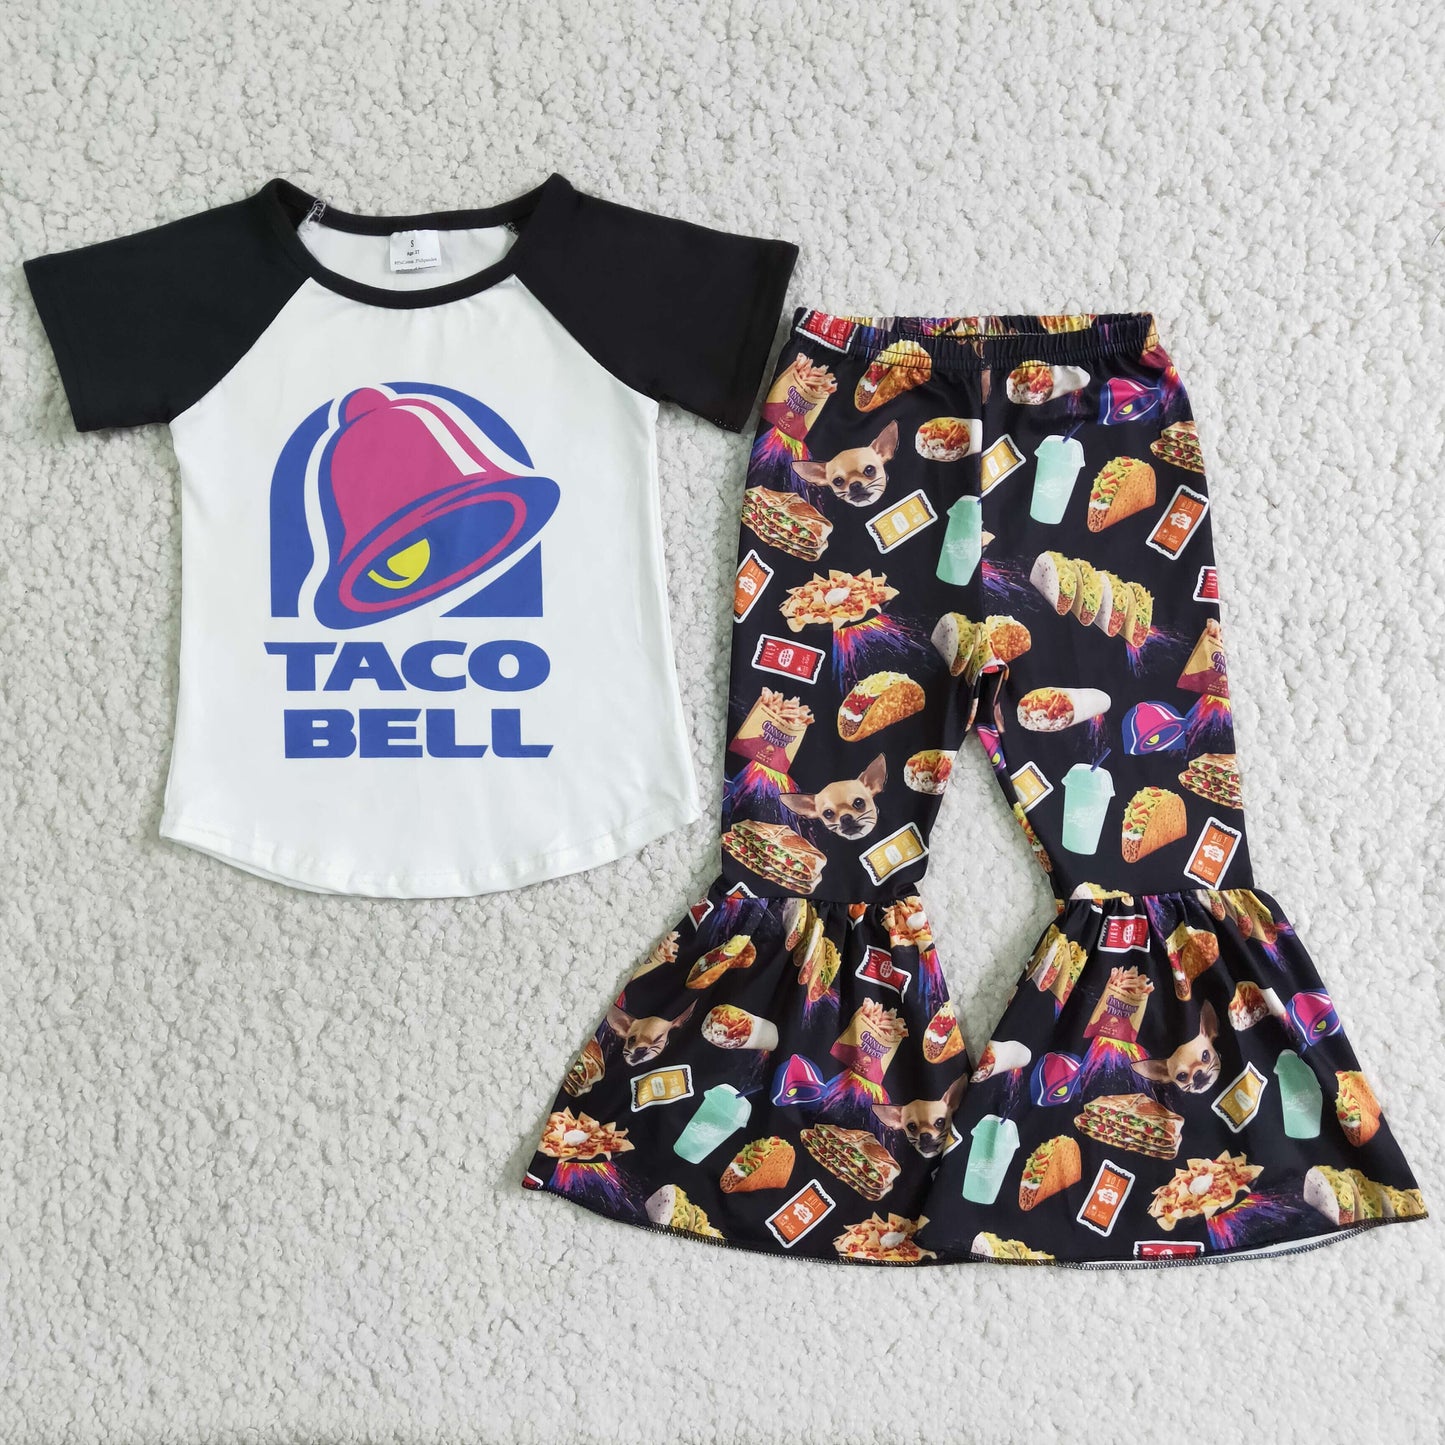 Taco bell shirt bell bottom pants kids clothing set